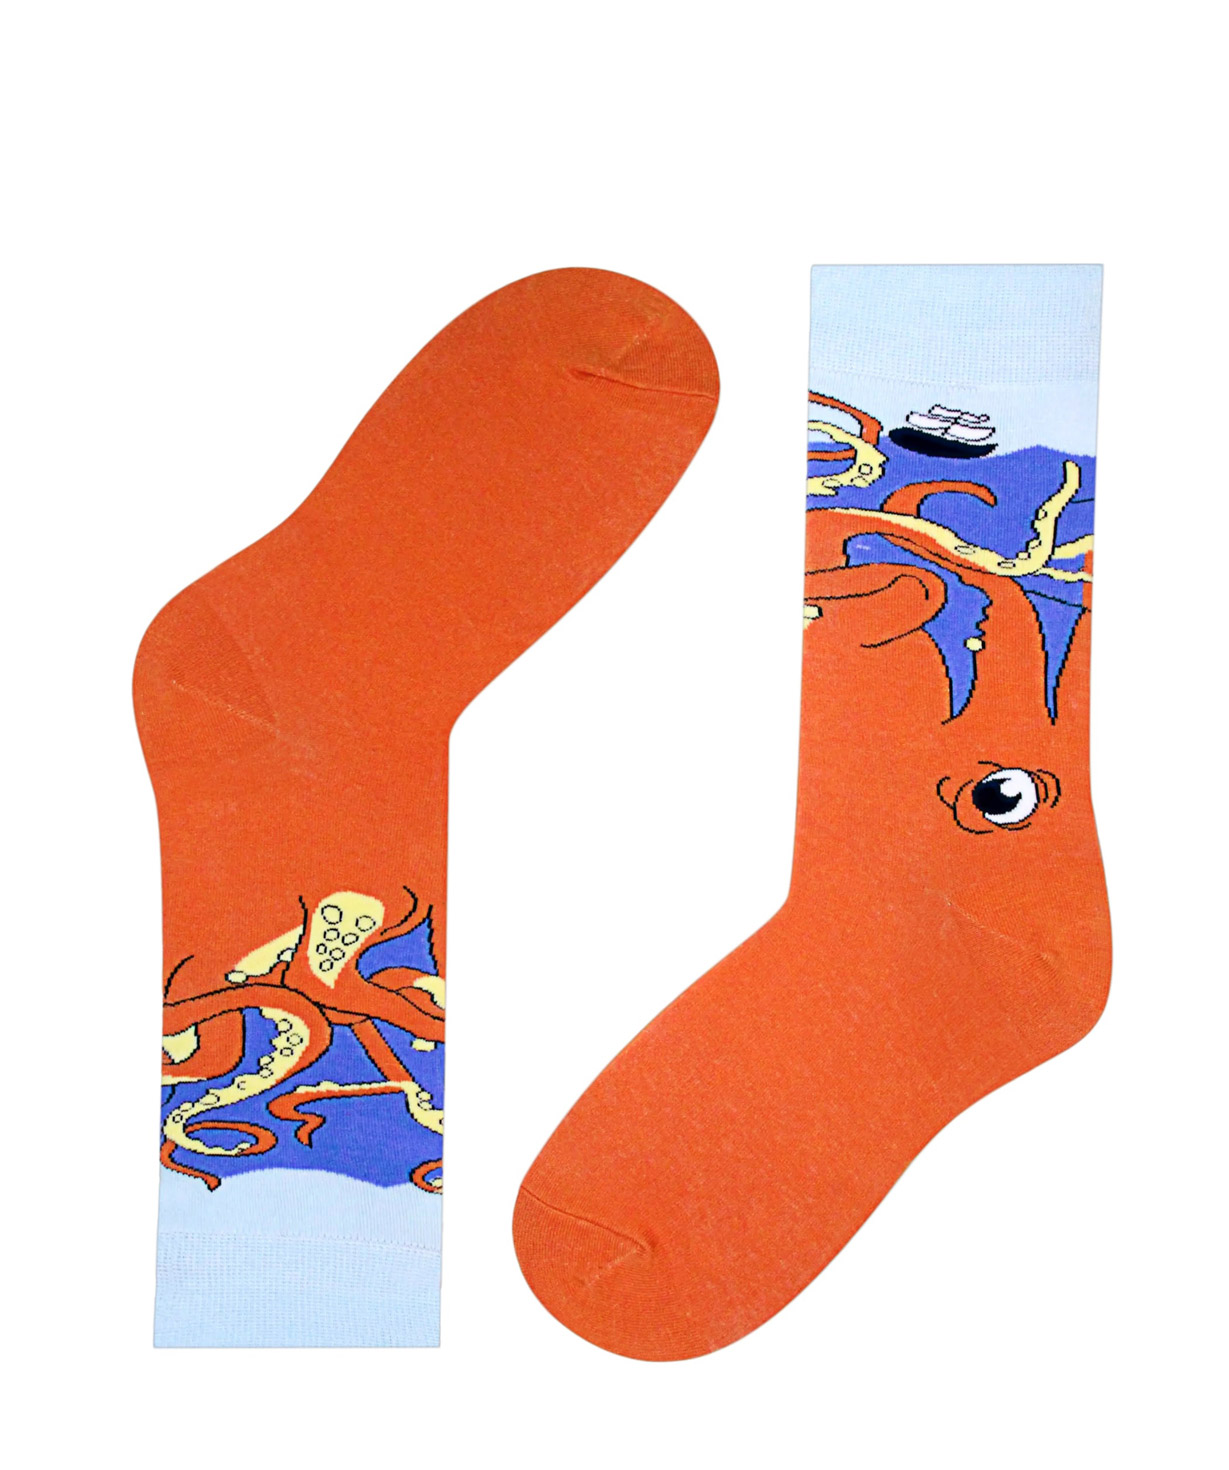 Socks `Zeal Socks` octopus and ship